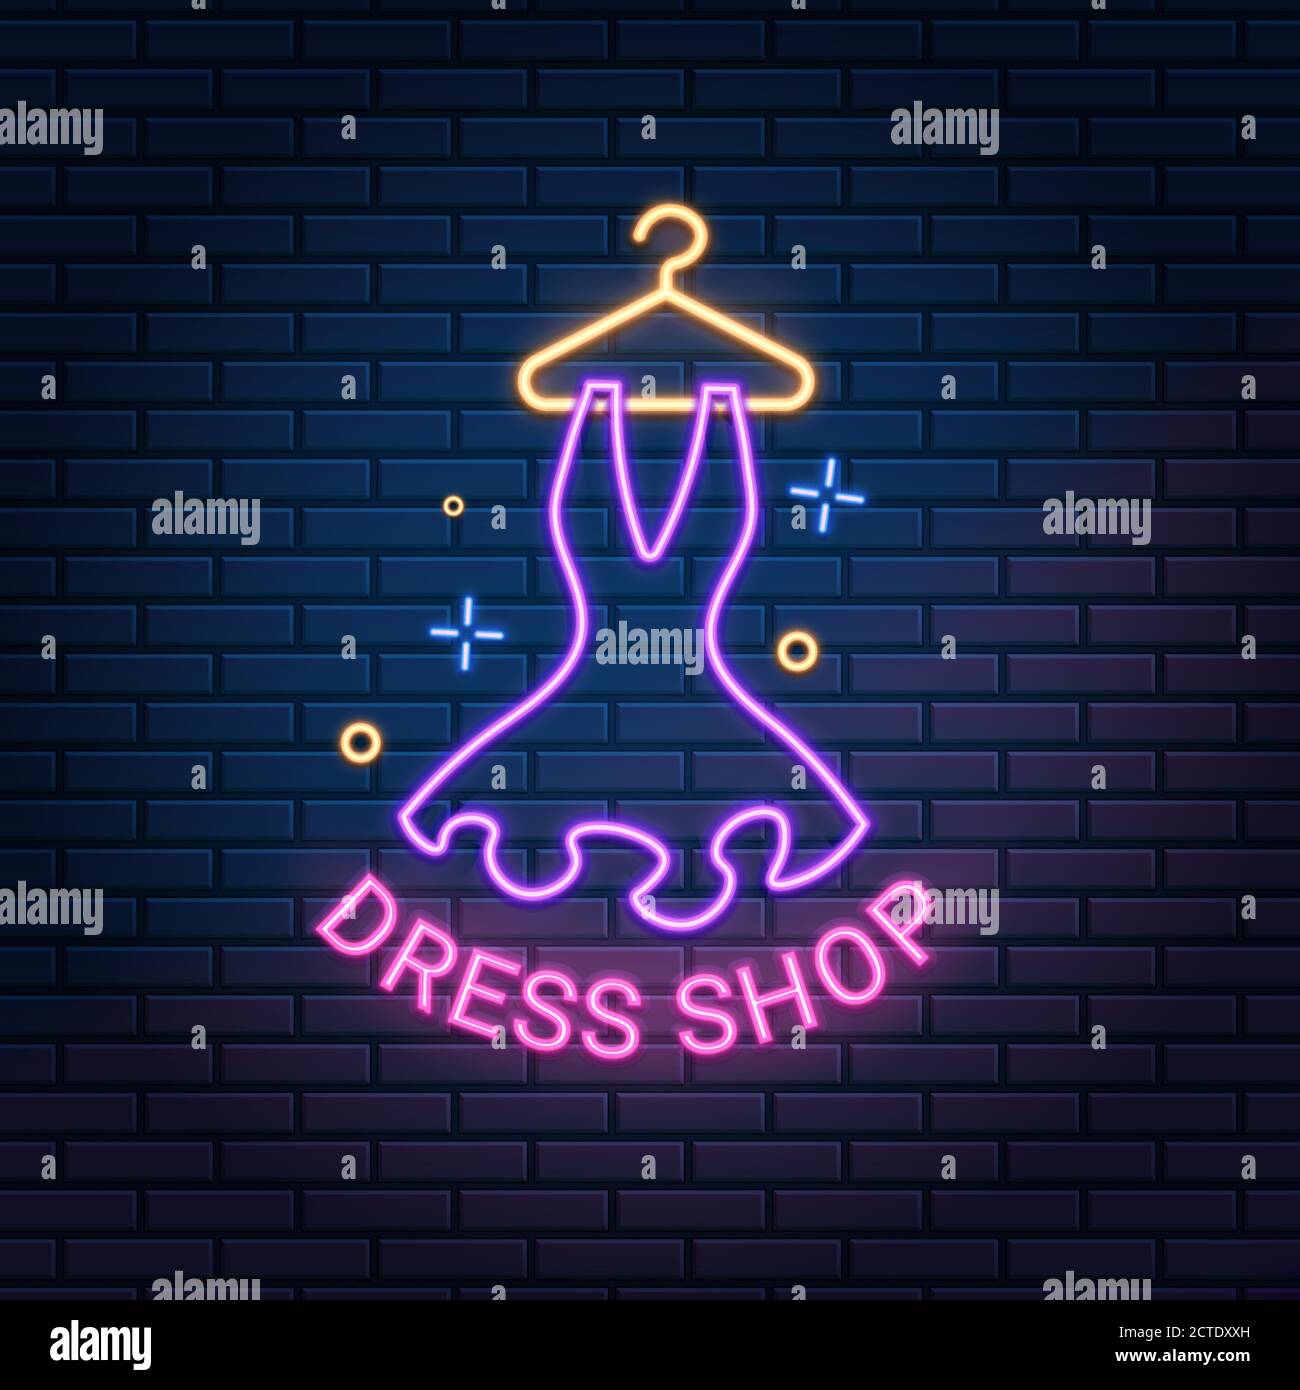 Dress shop neon light sign on dark brick wall background, vector illustration. Dressmaker, atelier, showroom, tailor, boutique banner Stock Vector